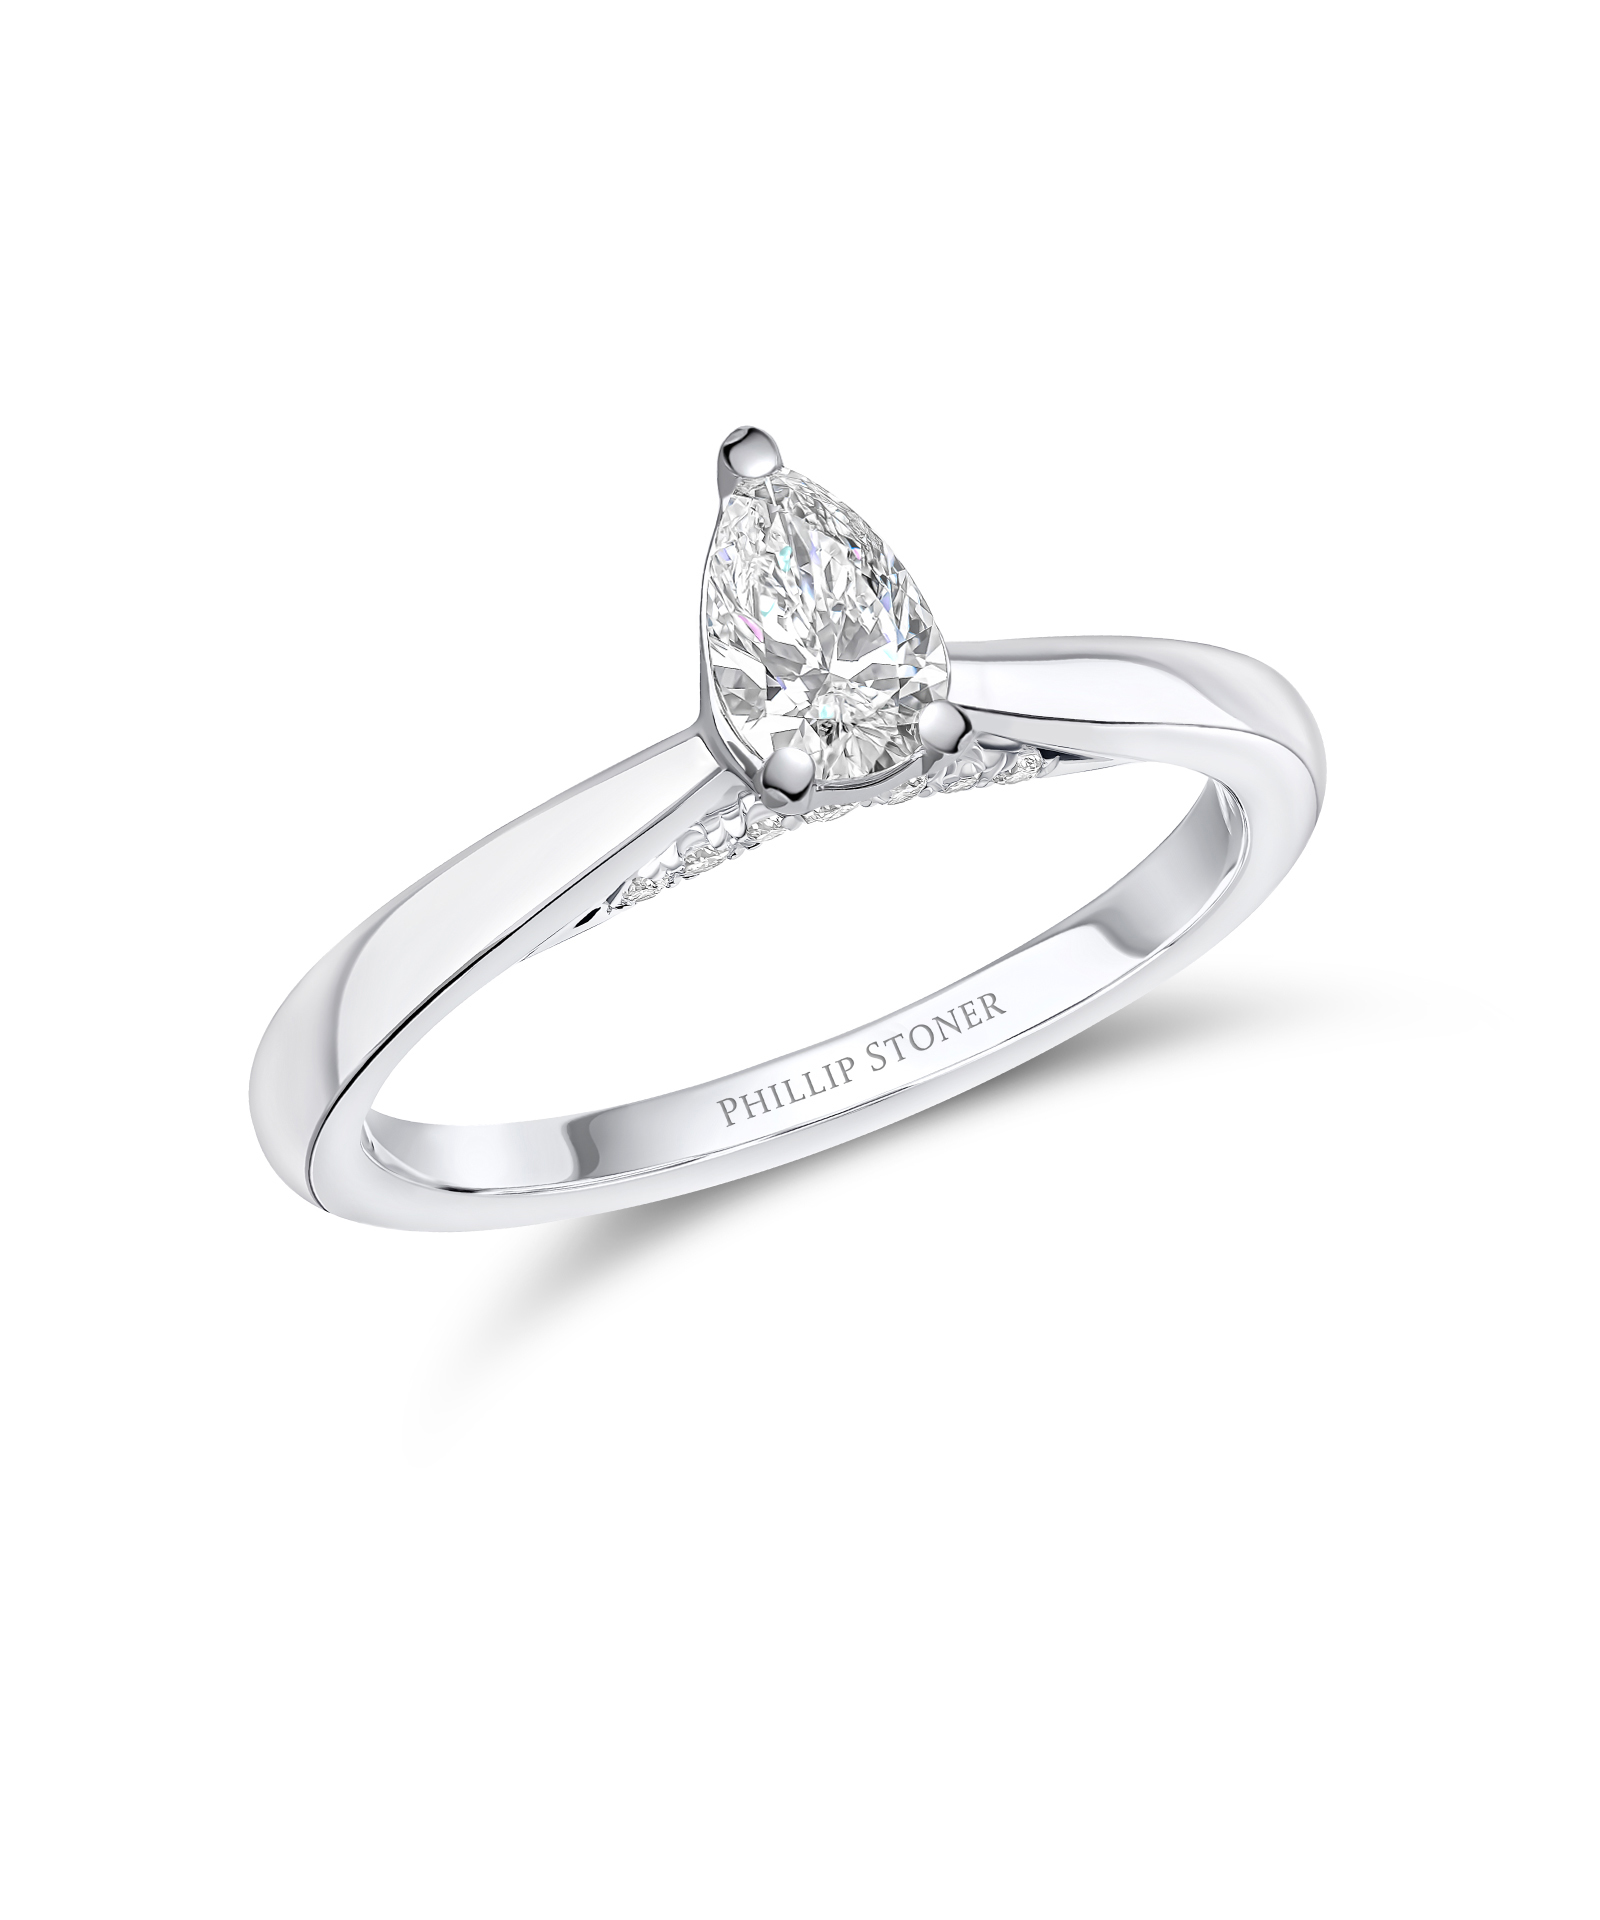 0.30ct Pear Cut Diamond Engagement Ring with Diamond Under Bezel - Phillip Stoner The Jeweller